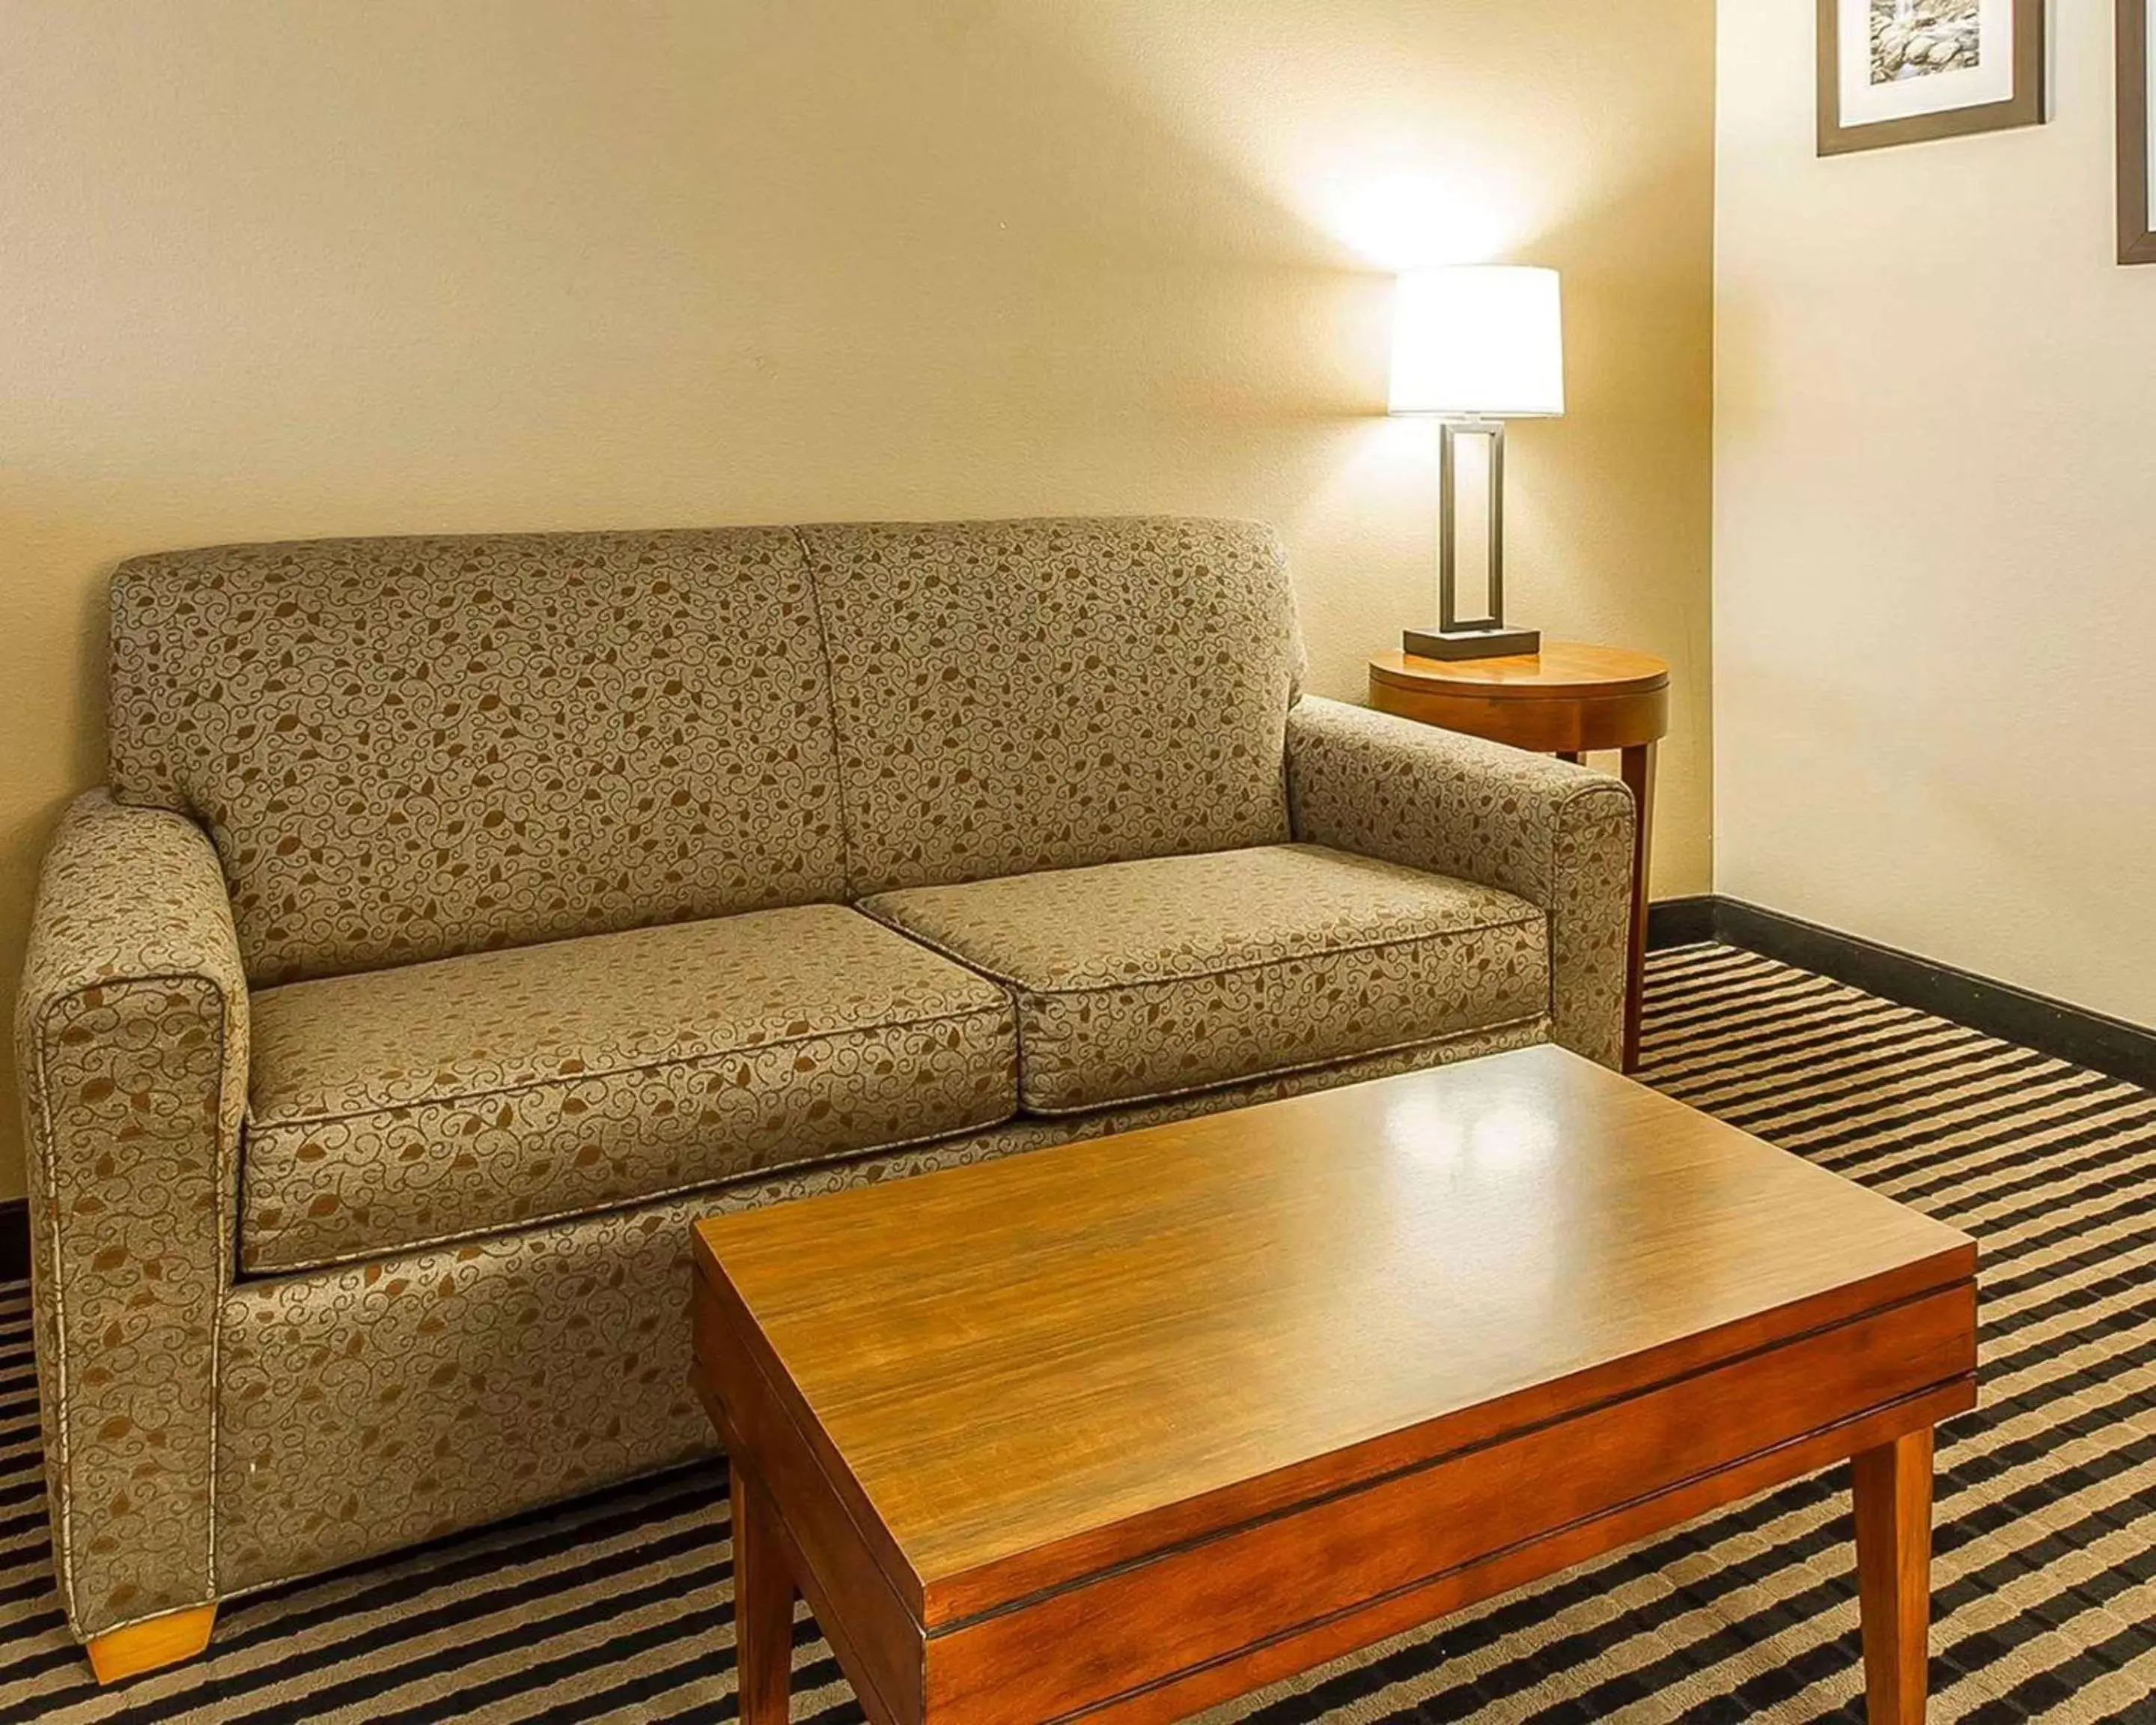 King Room - Non-Smoking in Comfort Inn Owatonna near Medical Center